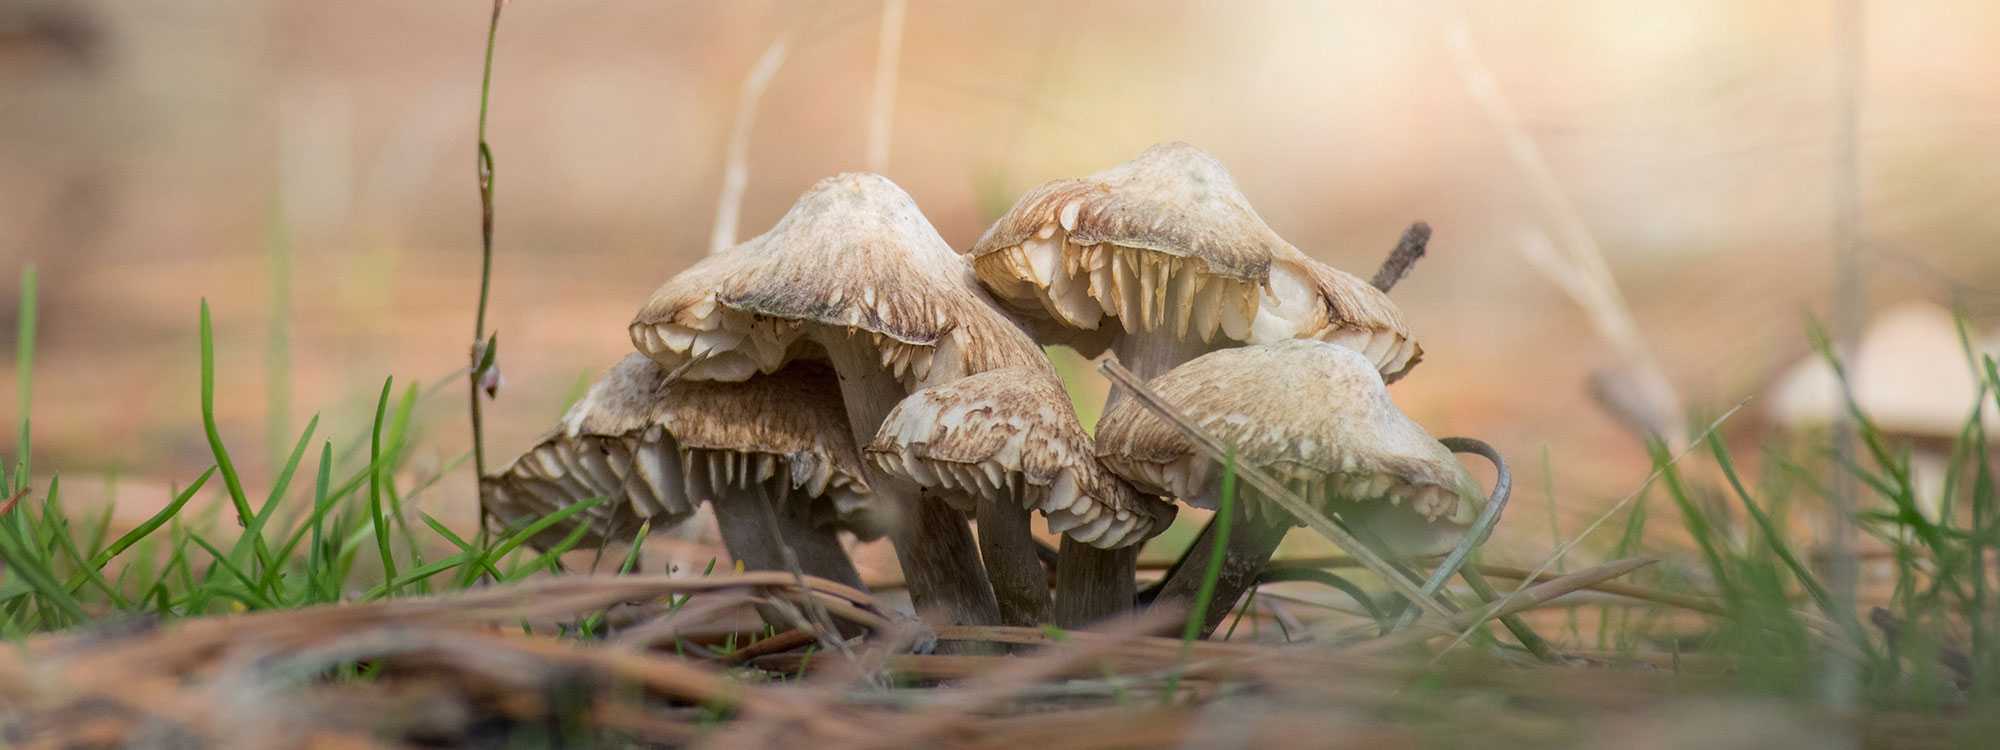 Brown mushrooms on ground